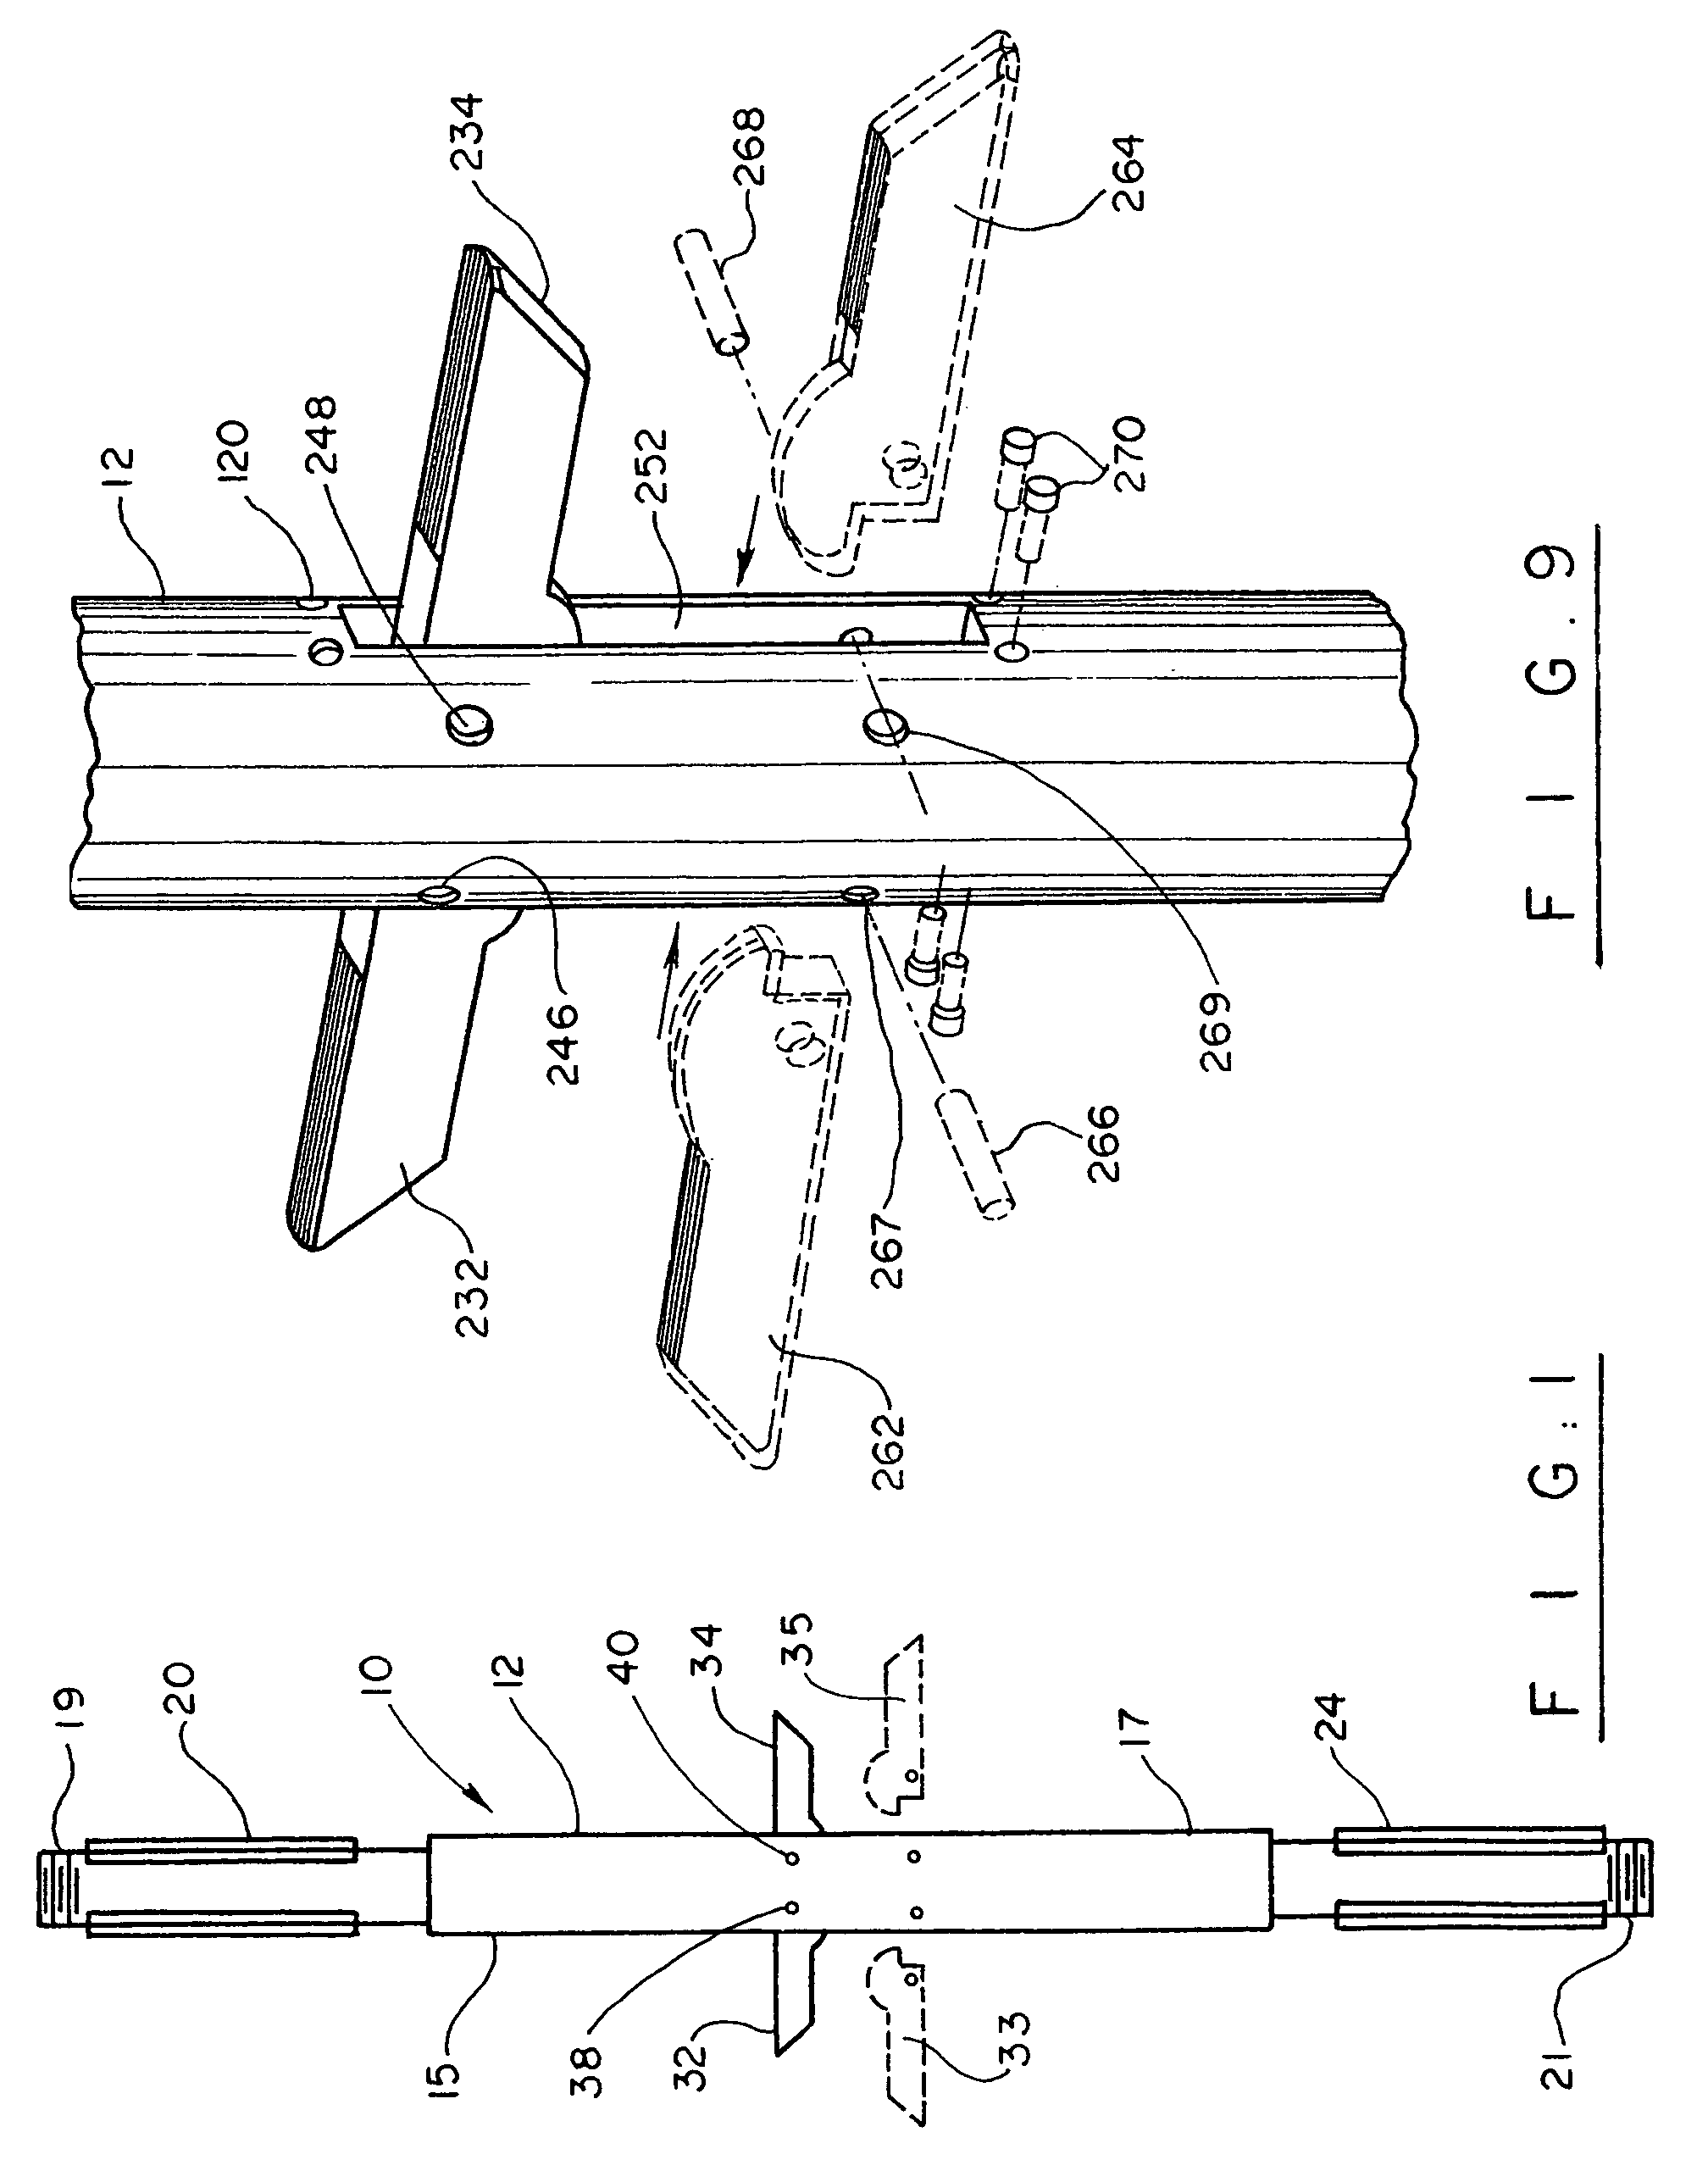 Reversible casing cutter